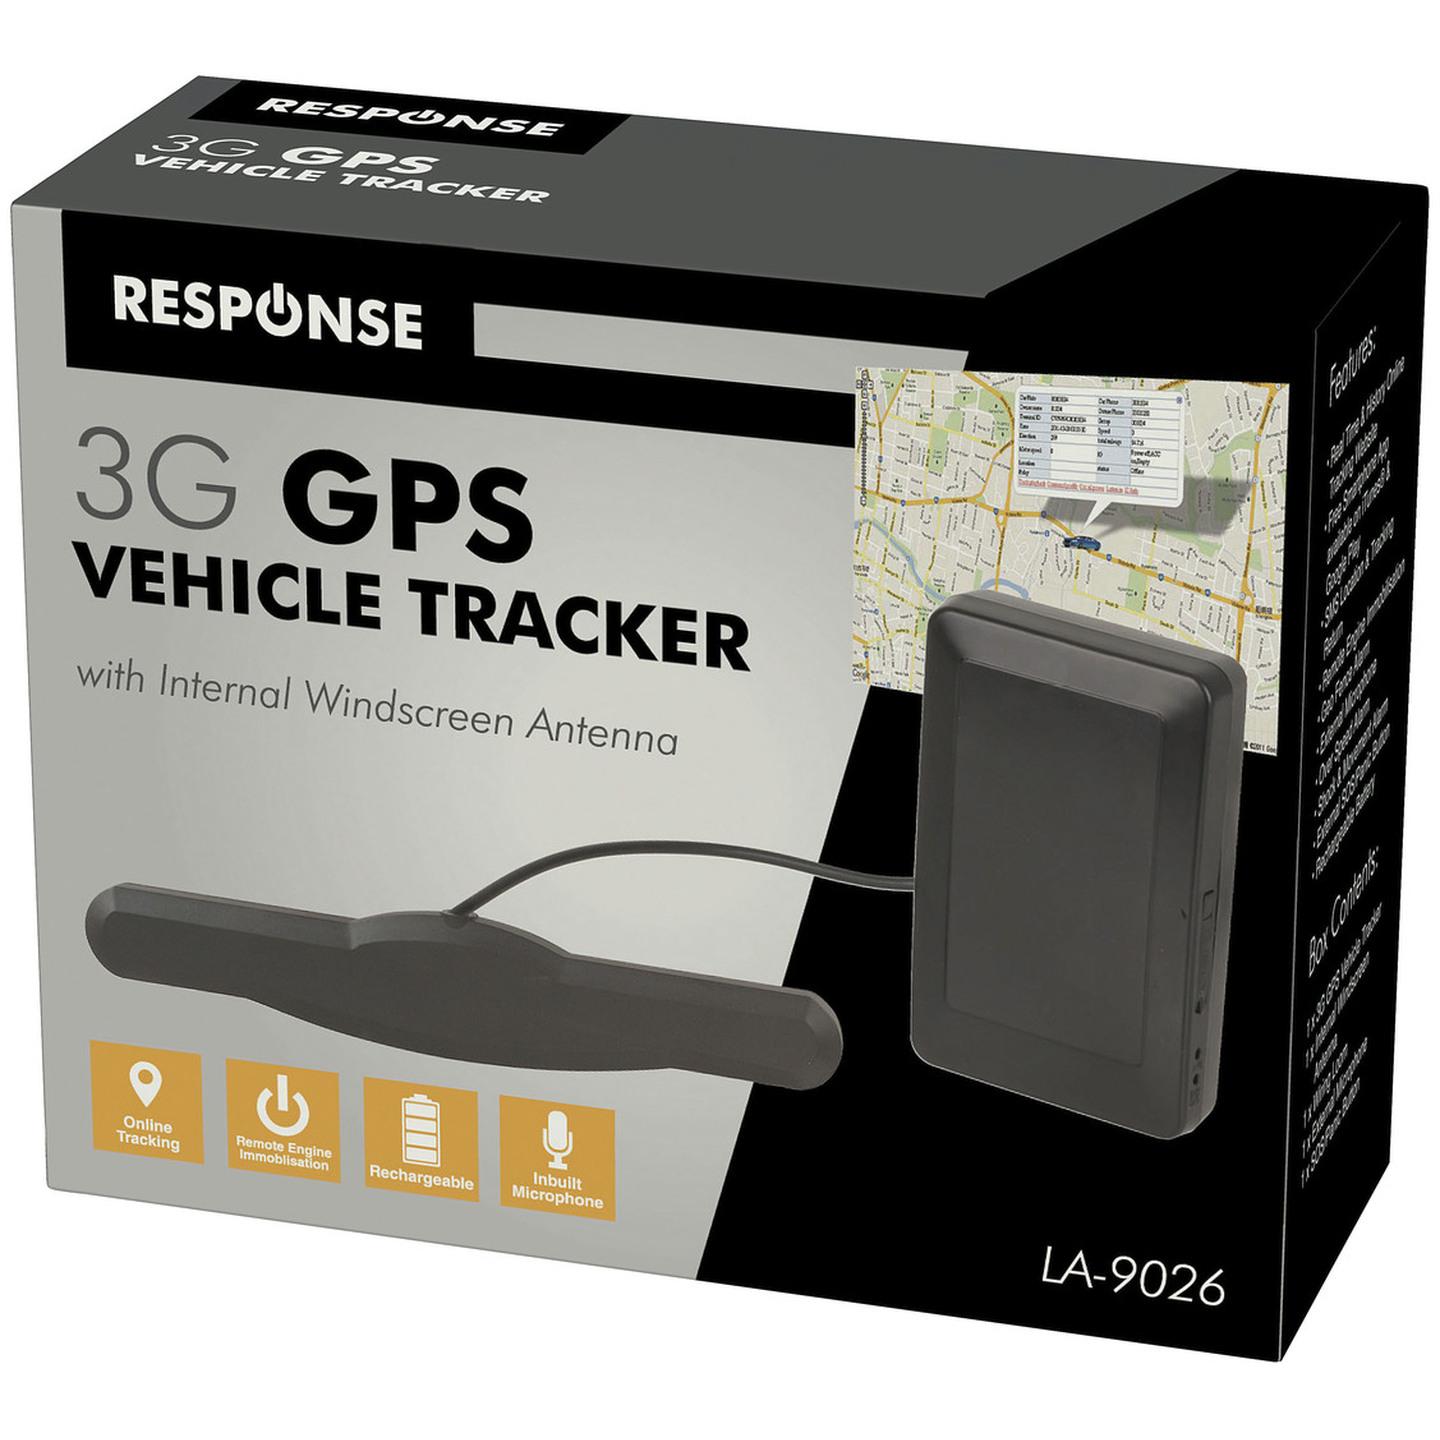 3G GPS Vehicle Tracker